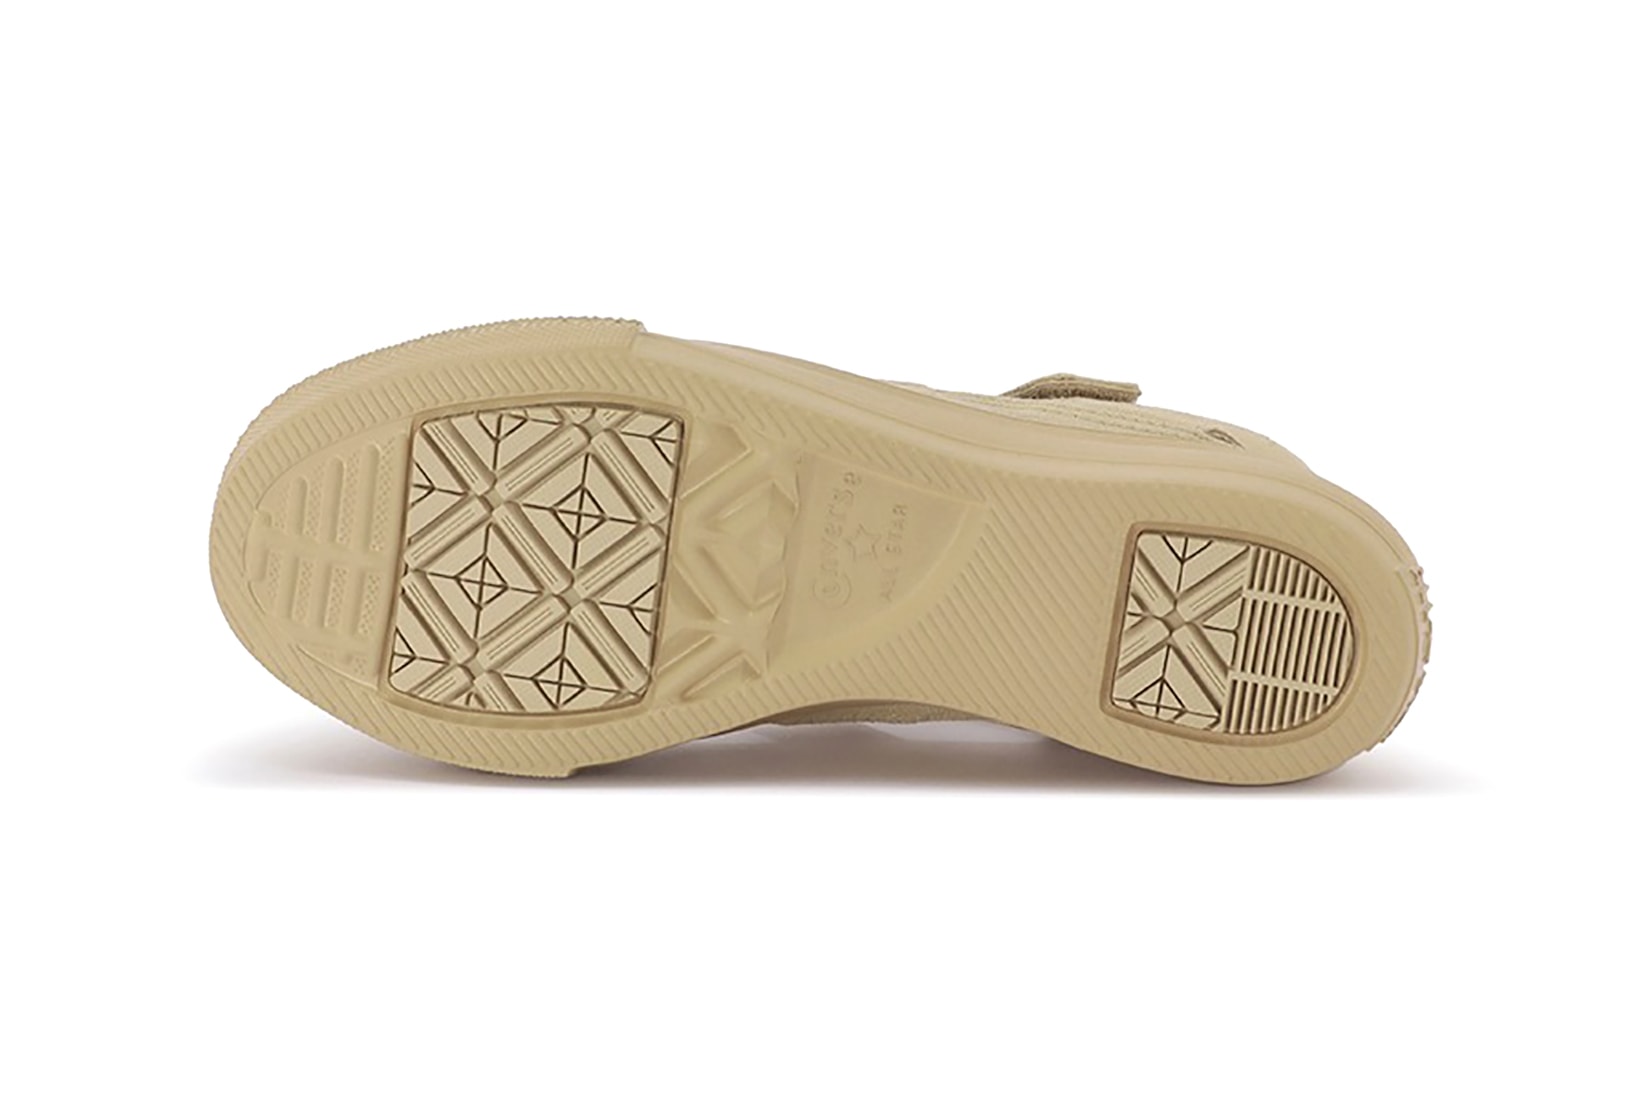 converse all star light plts gladiator ox sneakers sandals beige black footwear sneakerhead shoes 